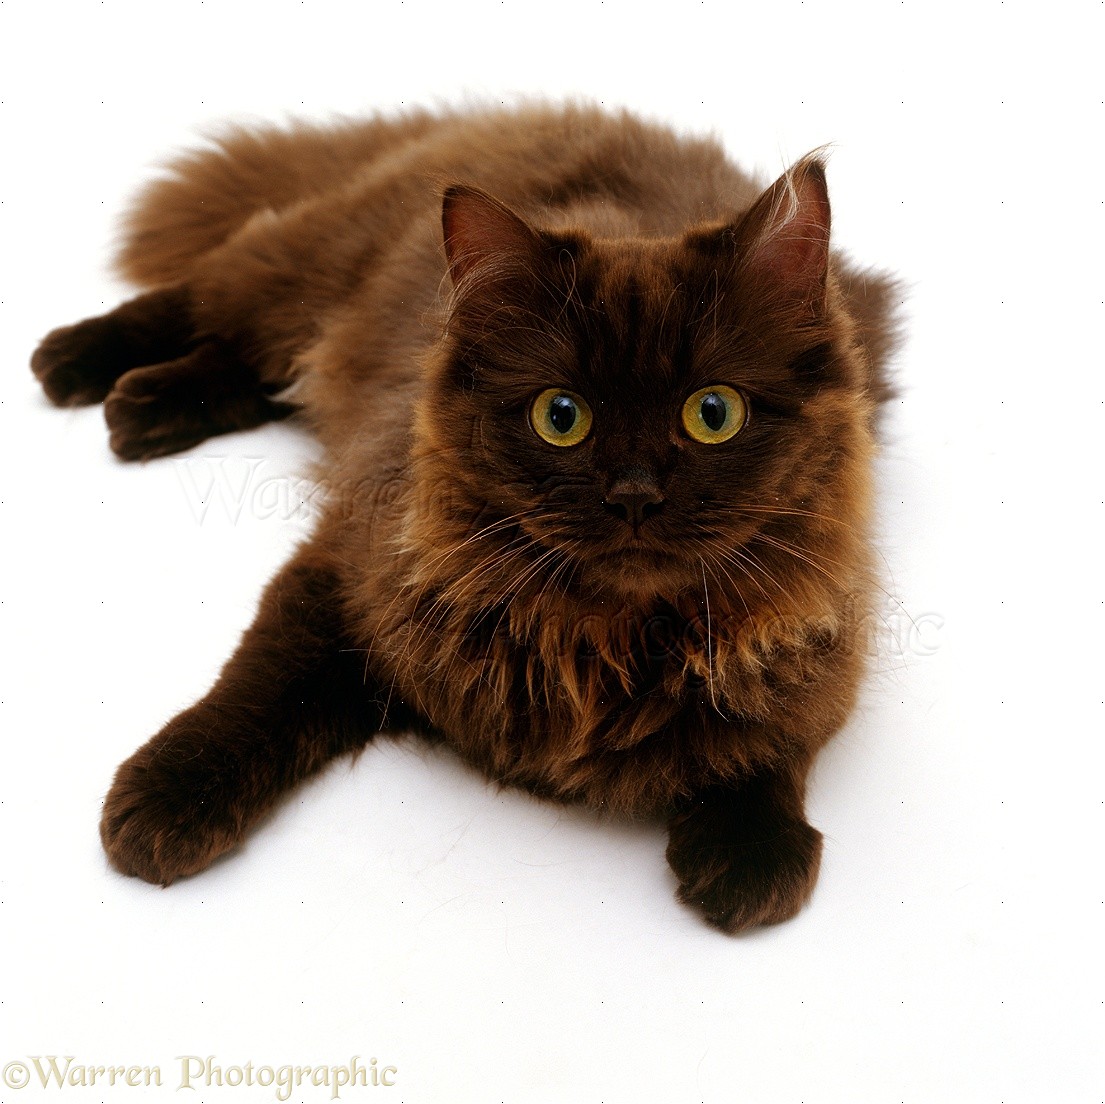 WP16616 Chocolate Persian cross female cat Chloe , 6 months old.